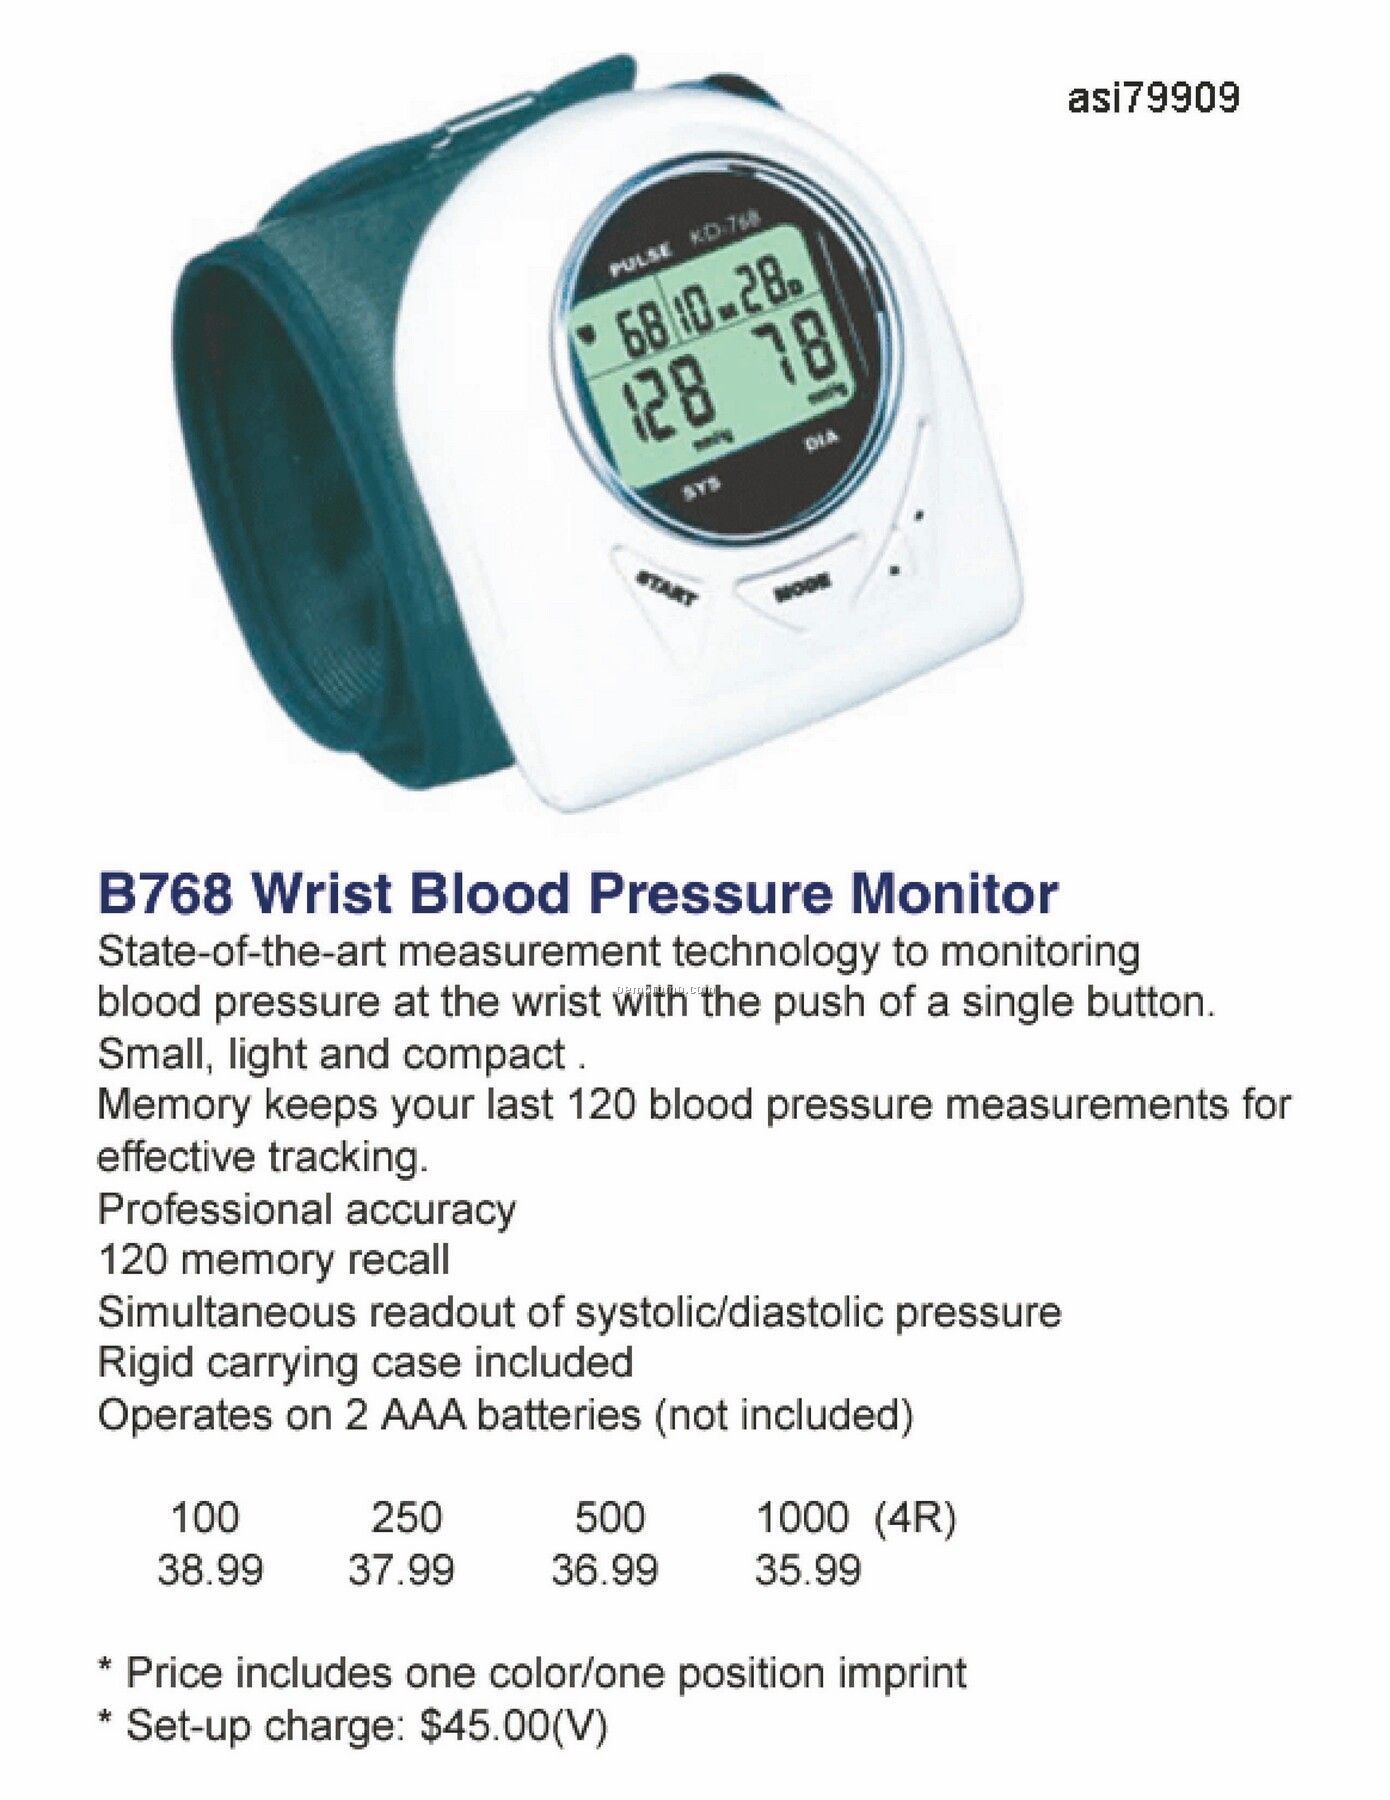 Automatic Blood Pressure Monitor